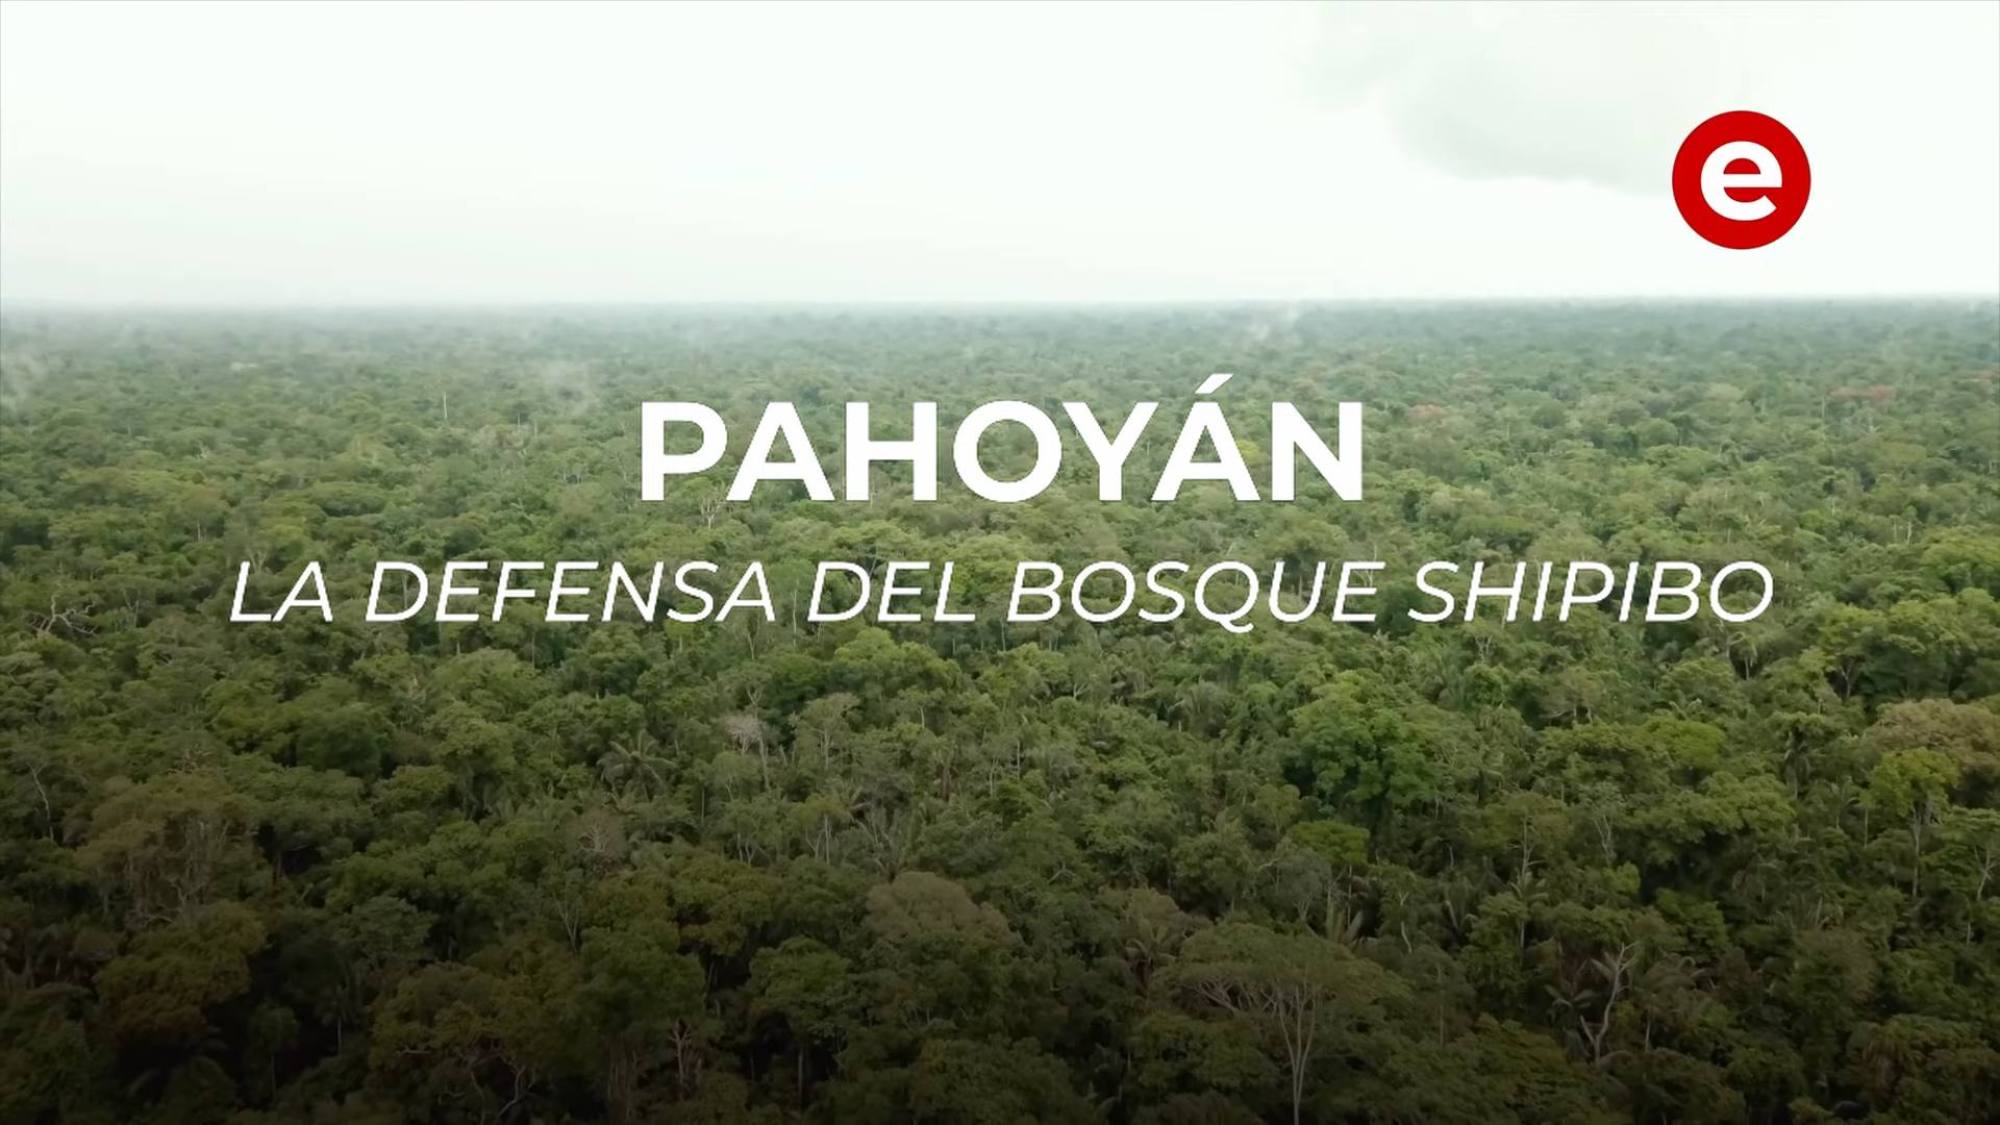 Pahoyán, la defensa del bosque shipibo, Epicentro TV